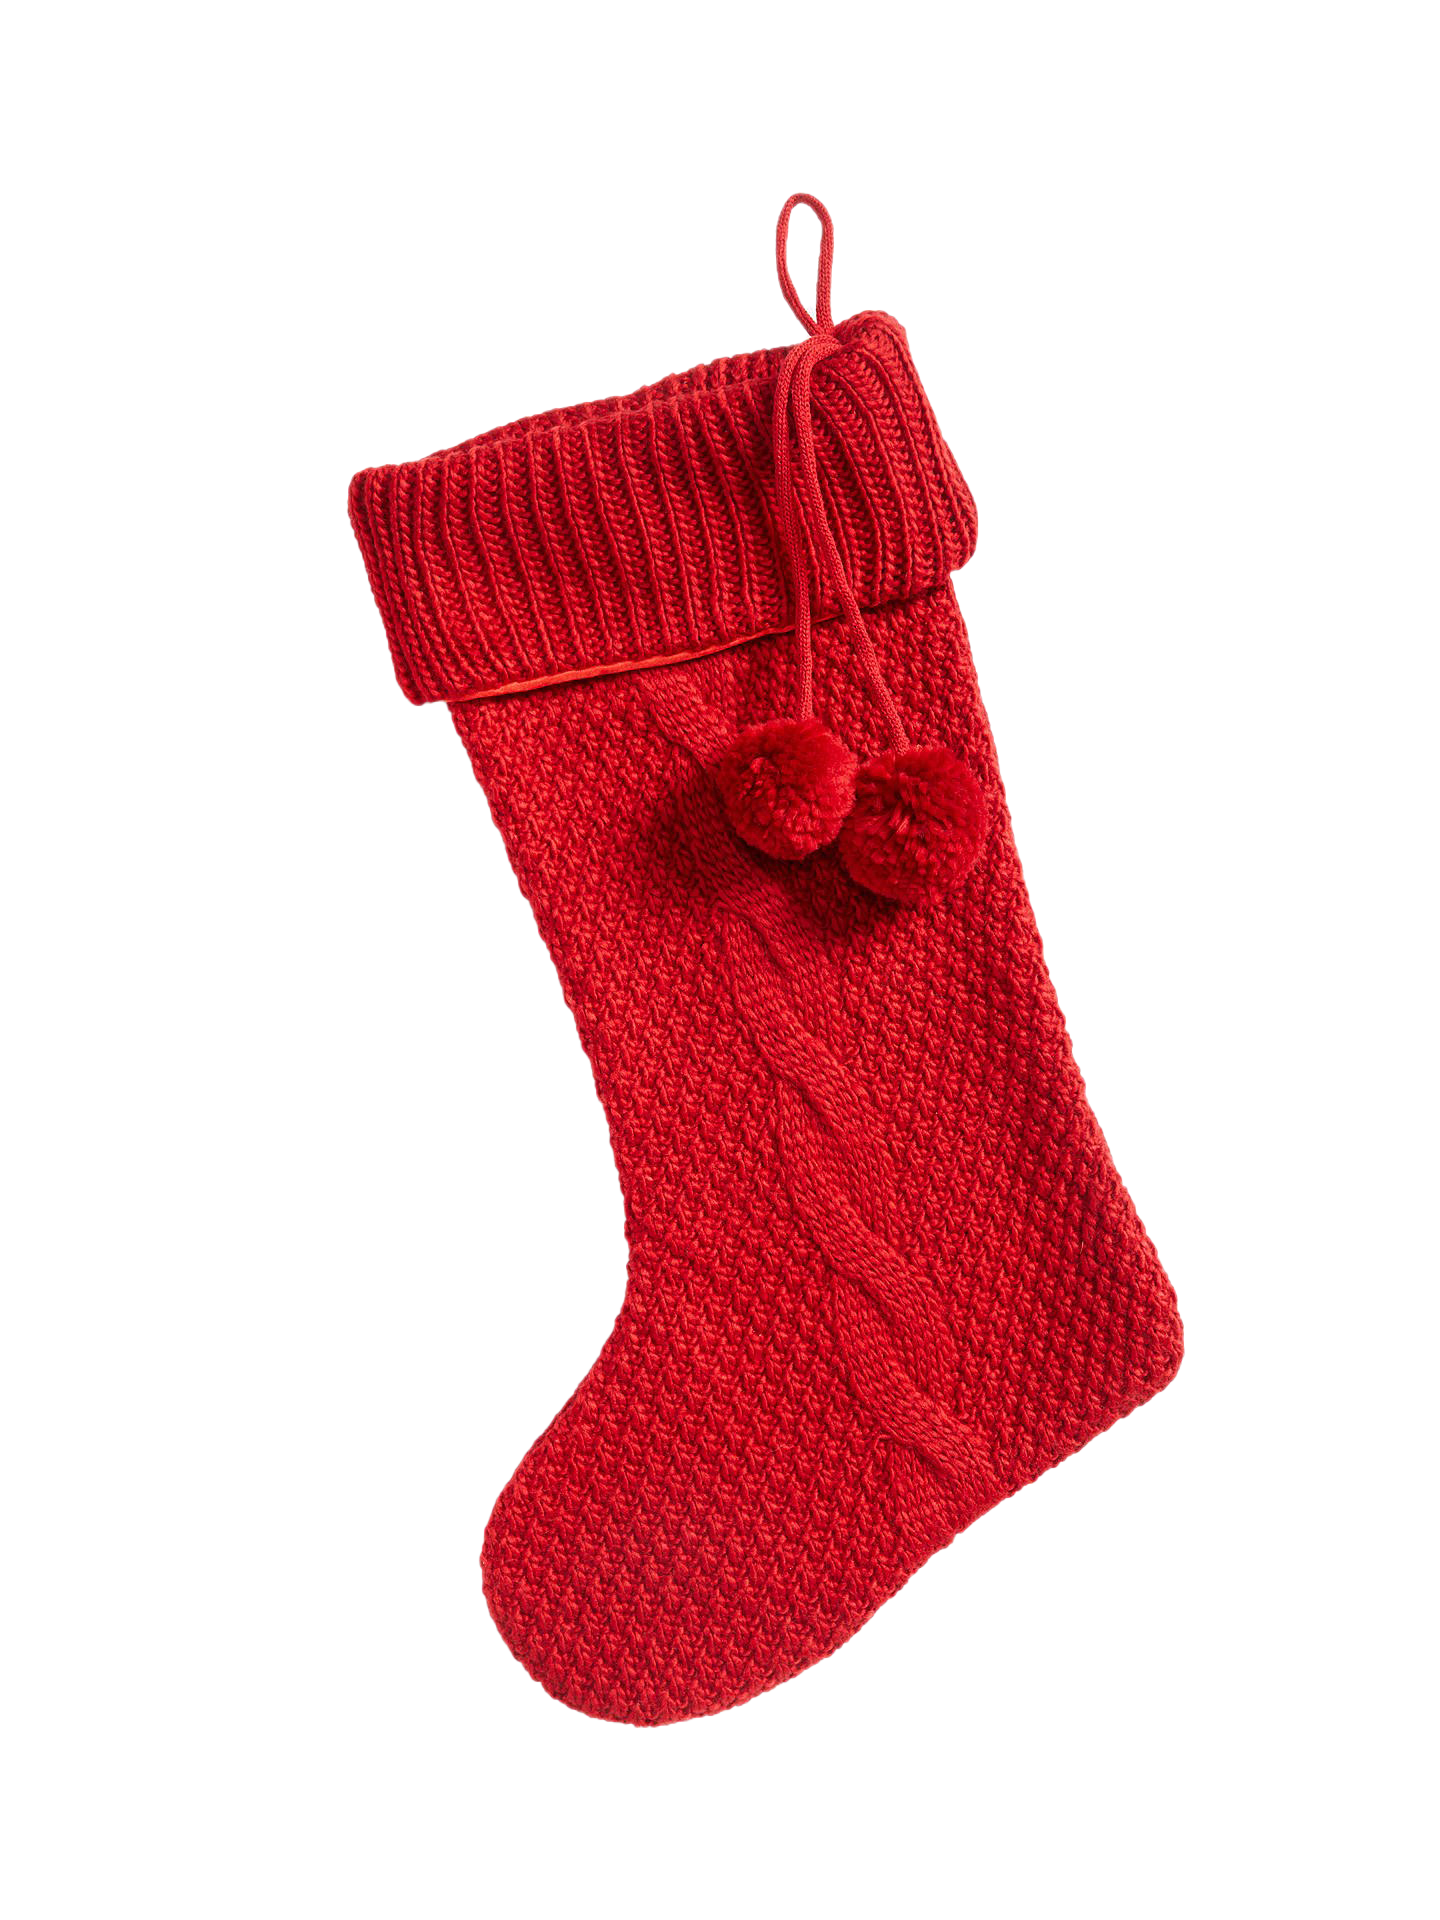 Red Christmas Stockings PNG Image